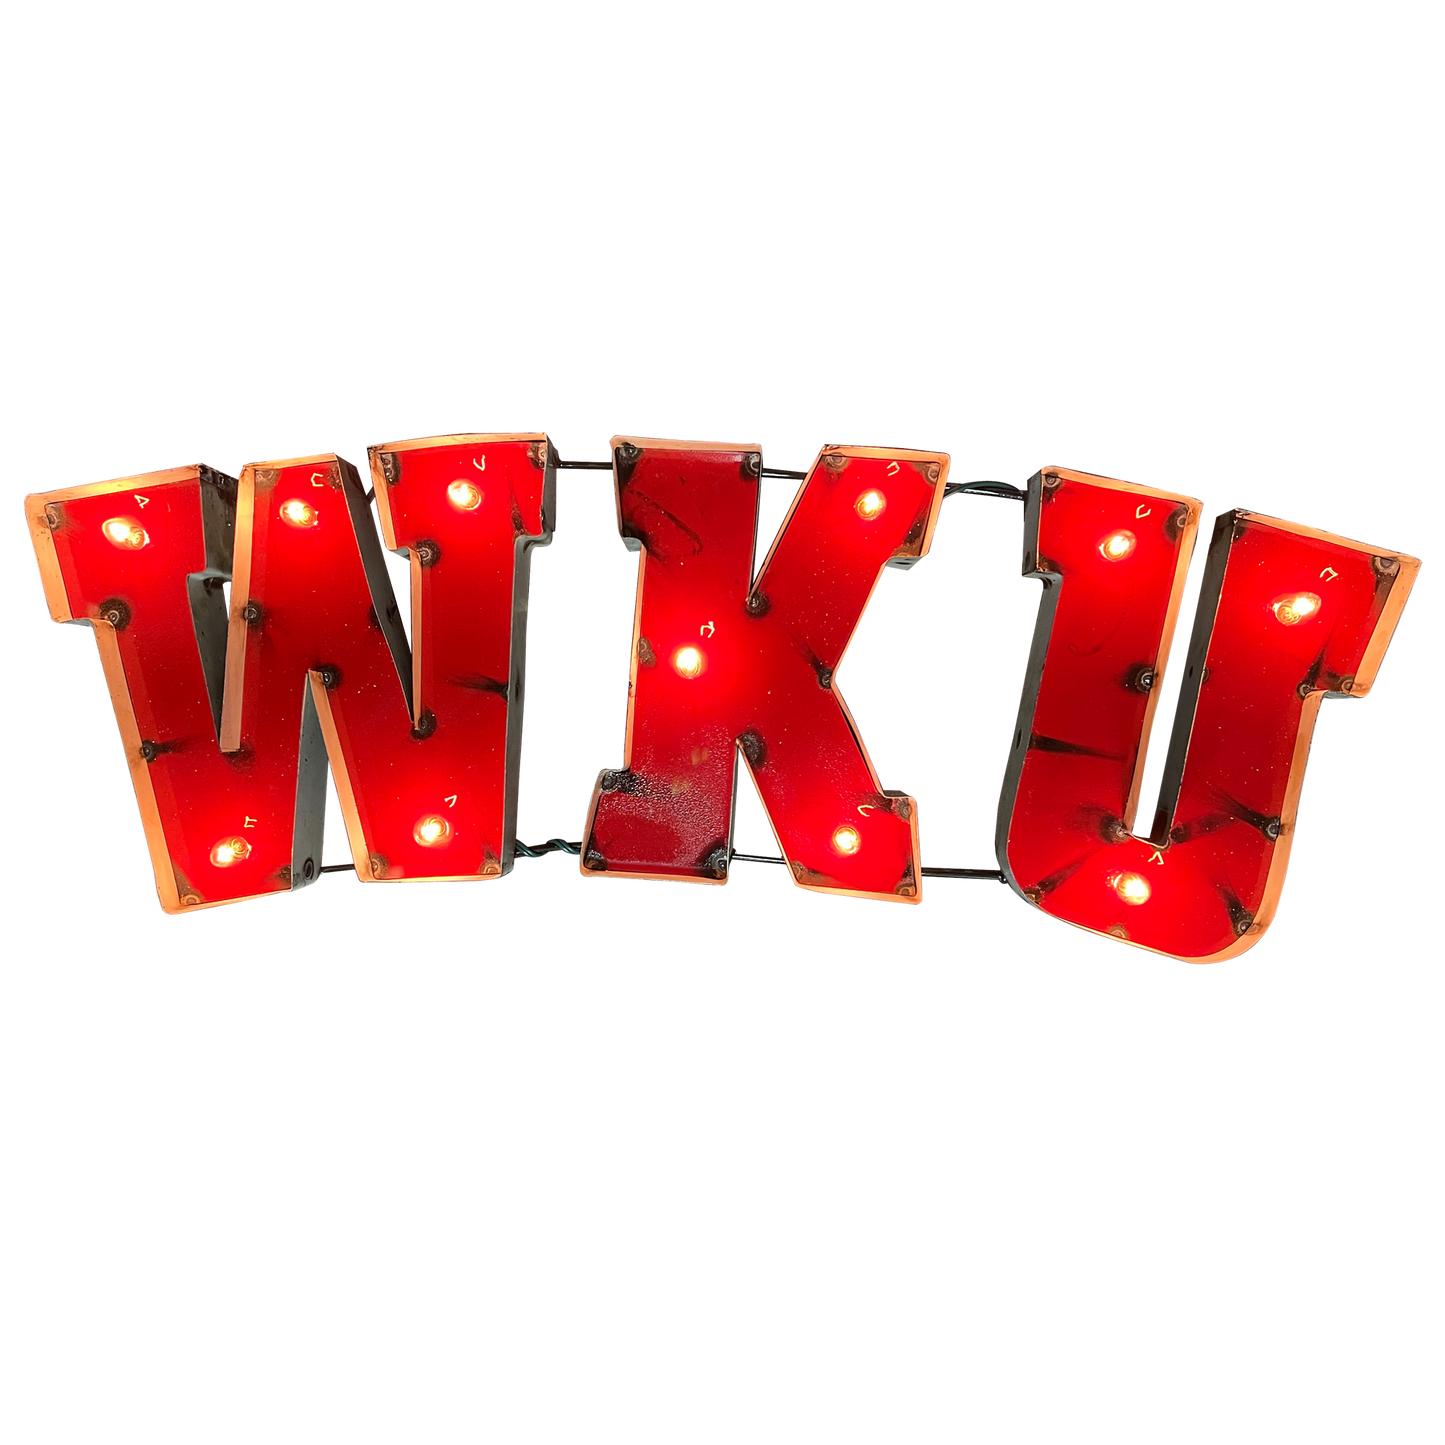 Western Kentucky University "WKU" Lighted Recycled Metal Wall Decor